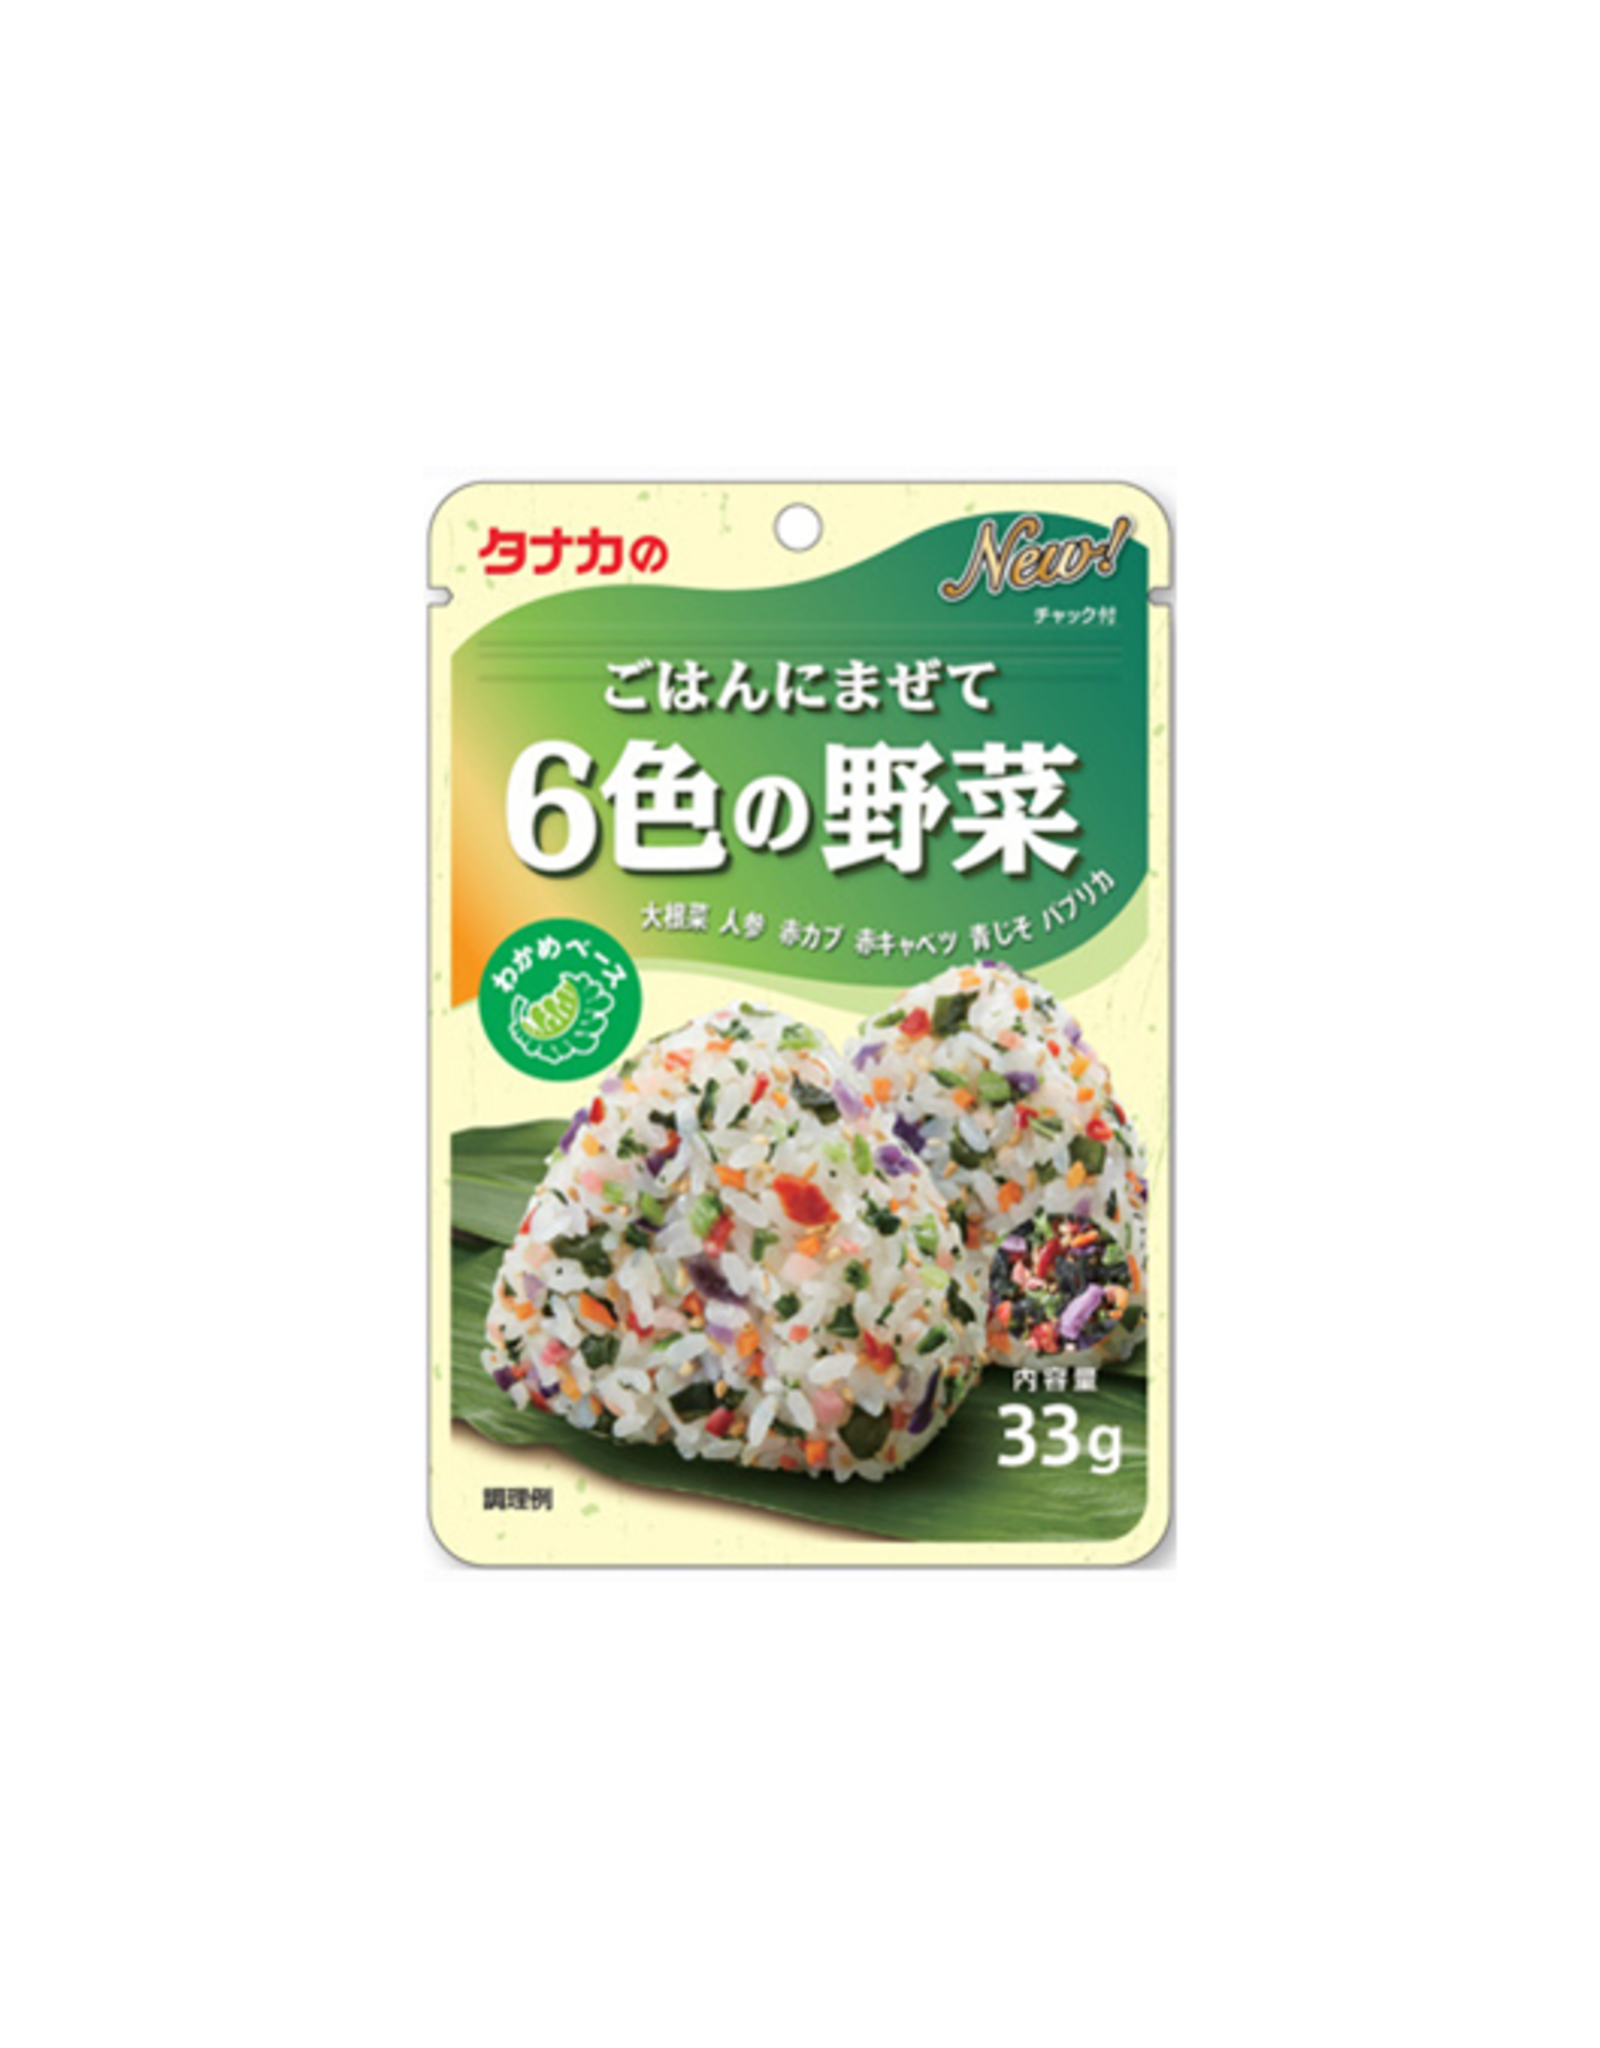 Tanaka Gohan Seasoning Powder for Rice 6-Vegetable Mix